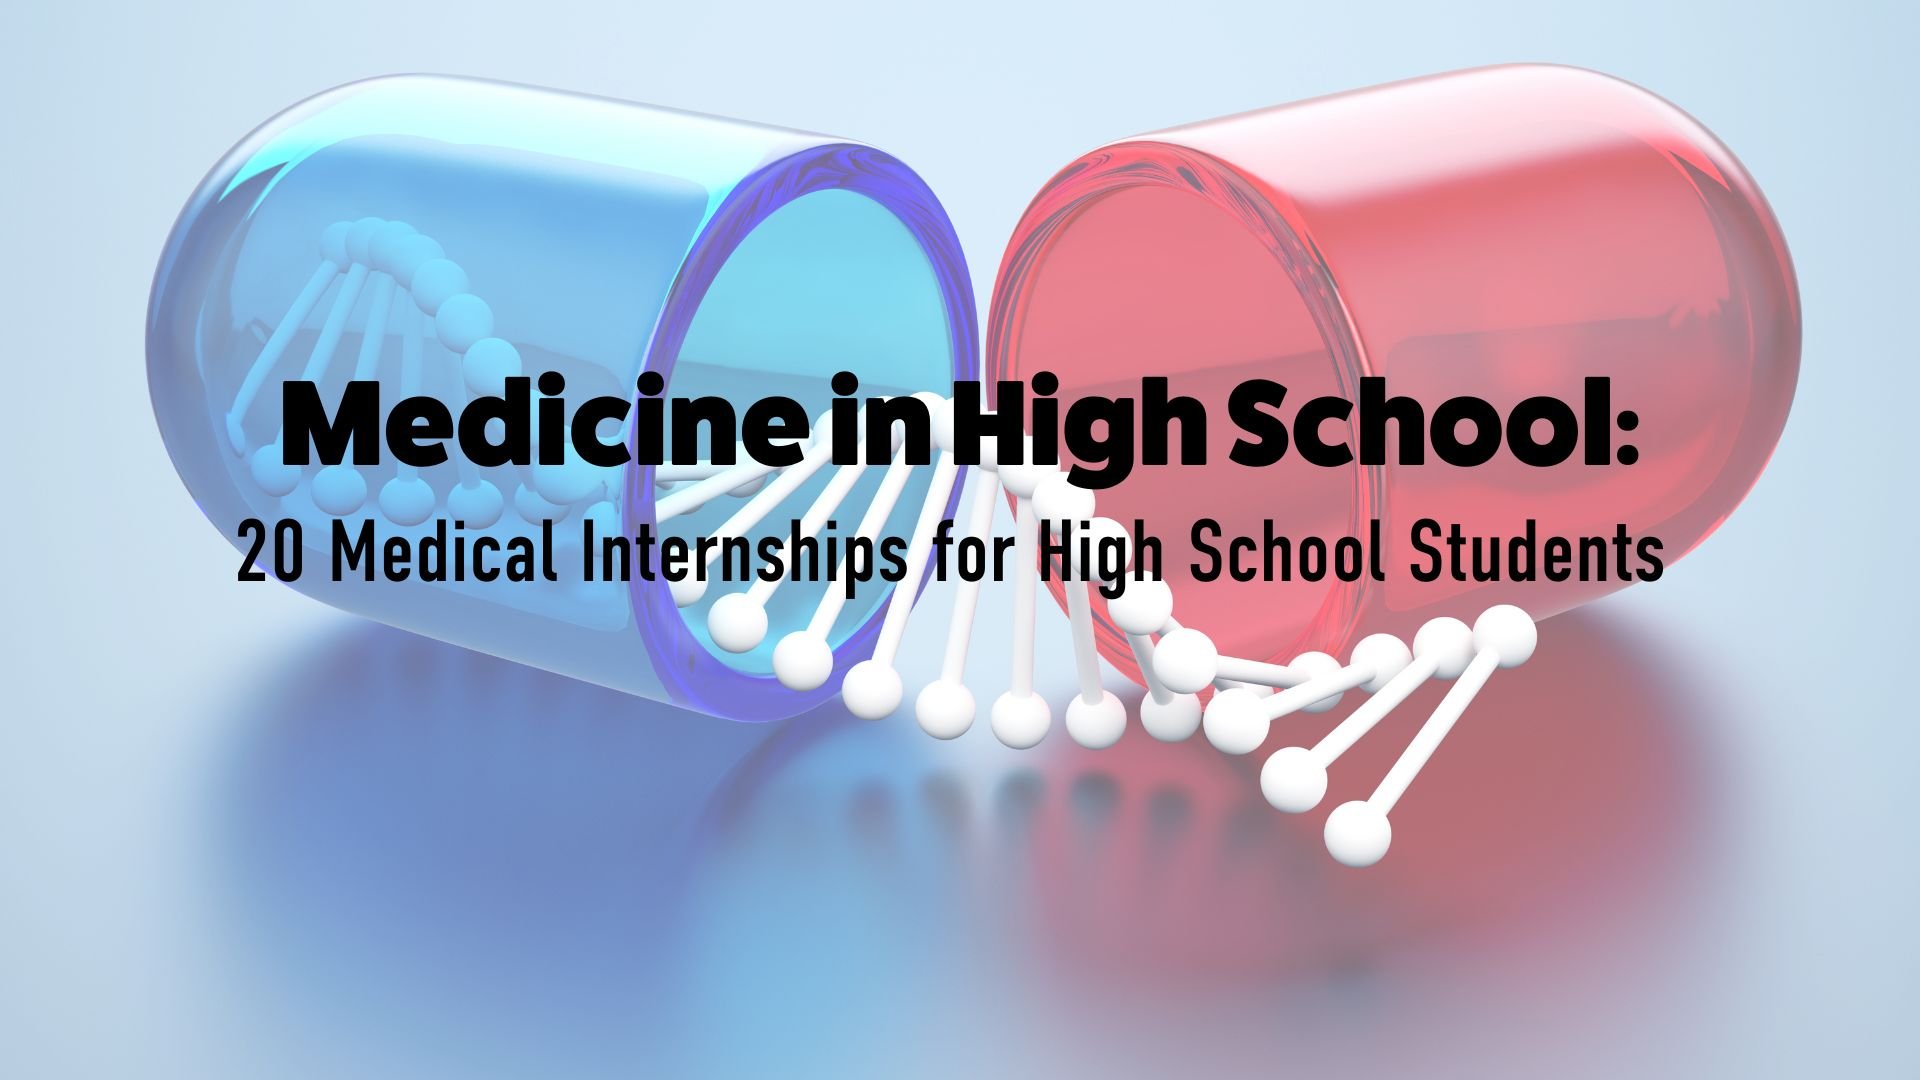 medical research internships high school